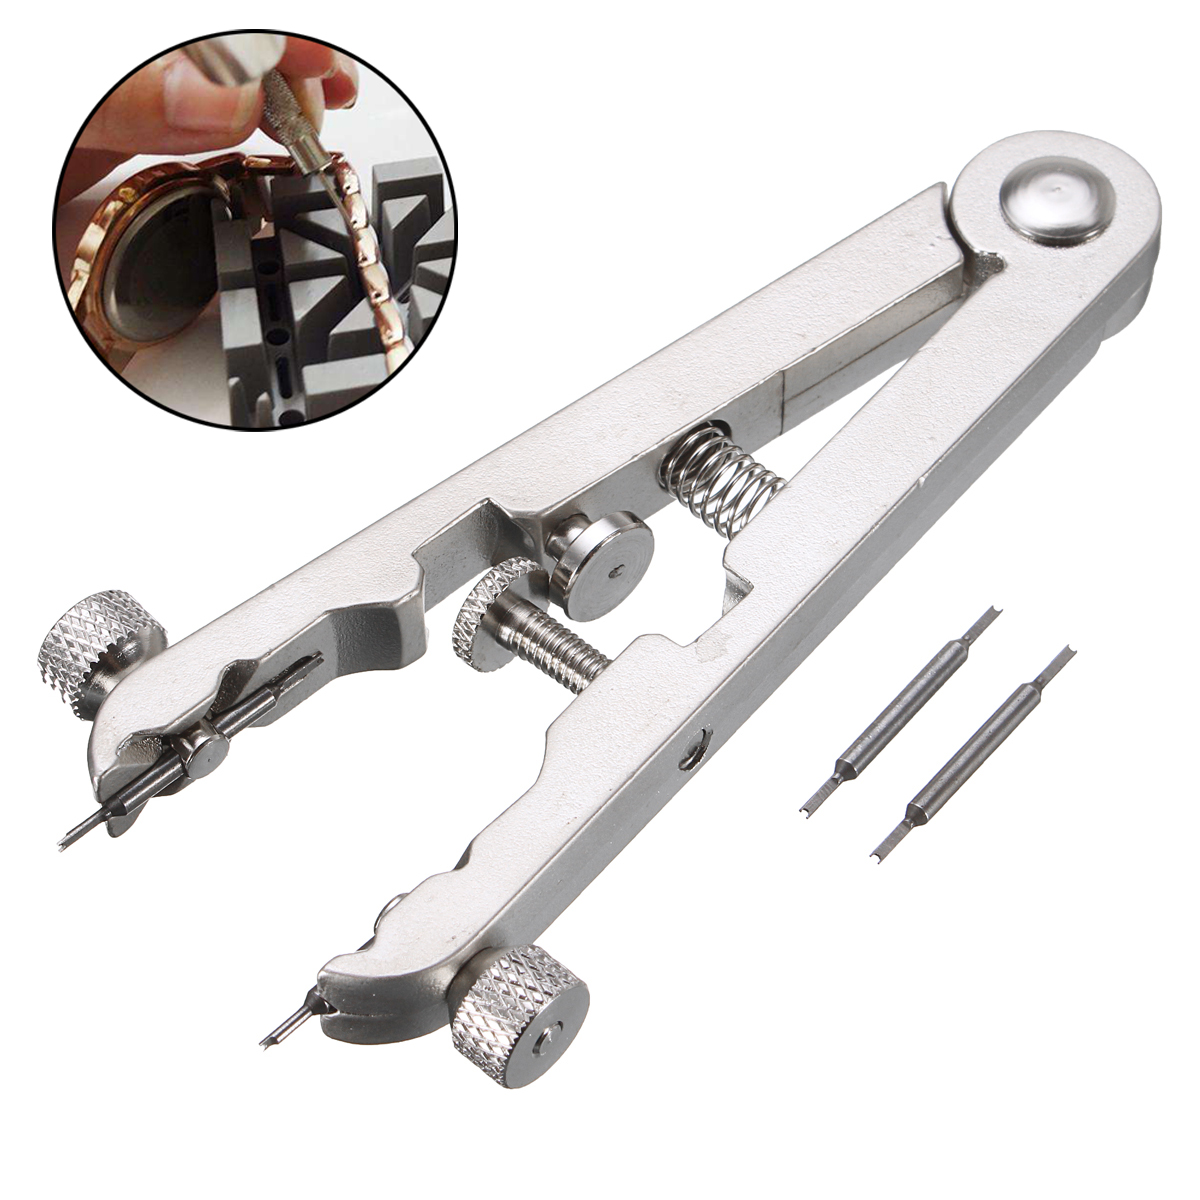 Bracelet-Spring-Bar-Remover-Watch-Tweezer-Strip-Replace-Tool-For-ROLEX-6825-1183855-1